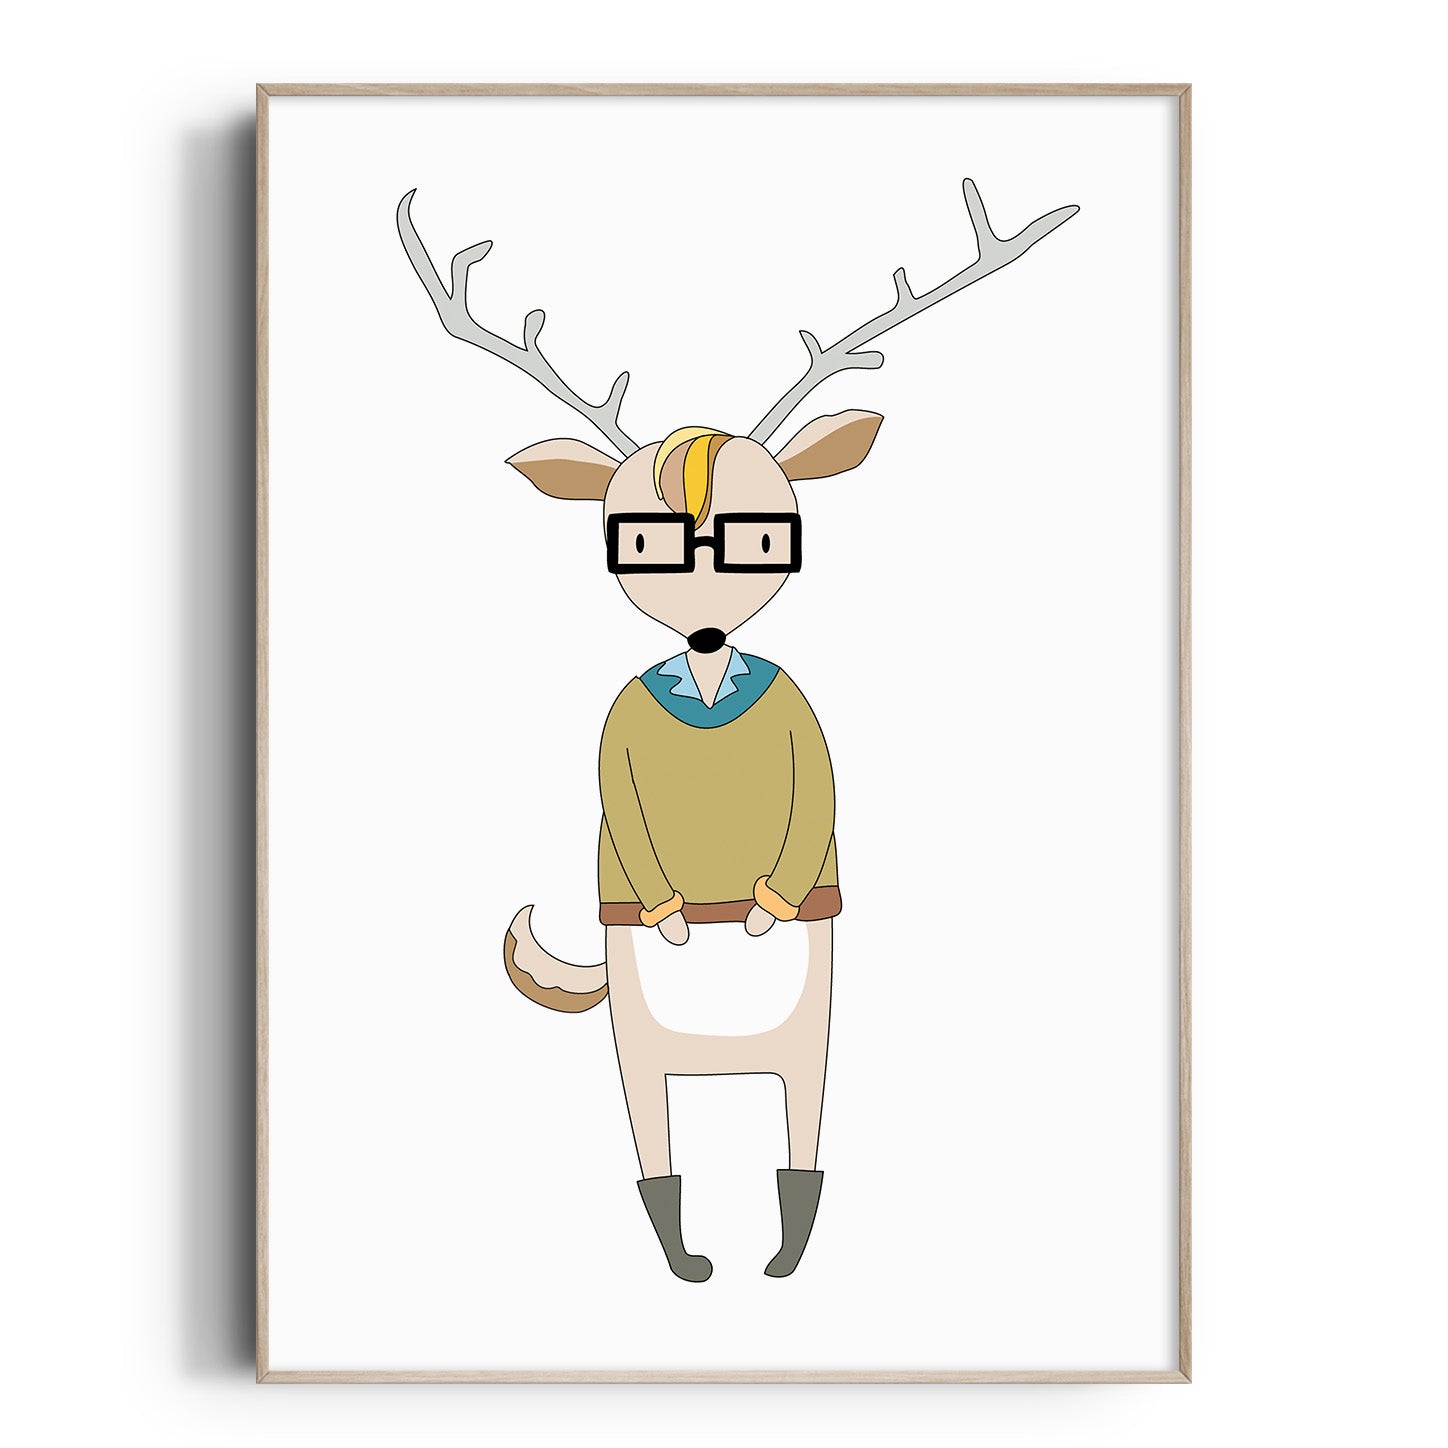 Hipster Deer Print